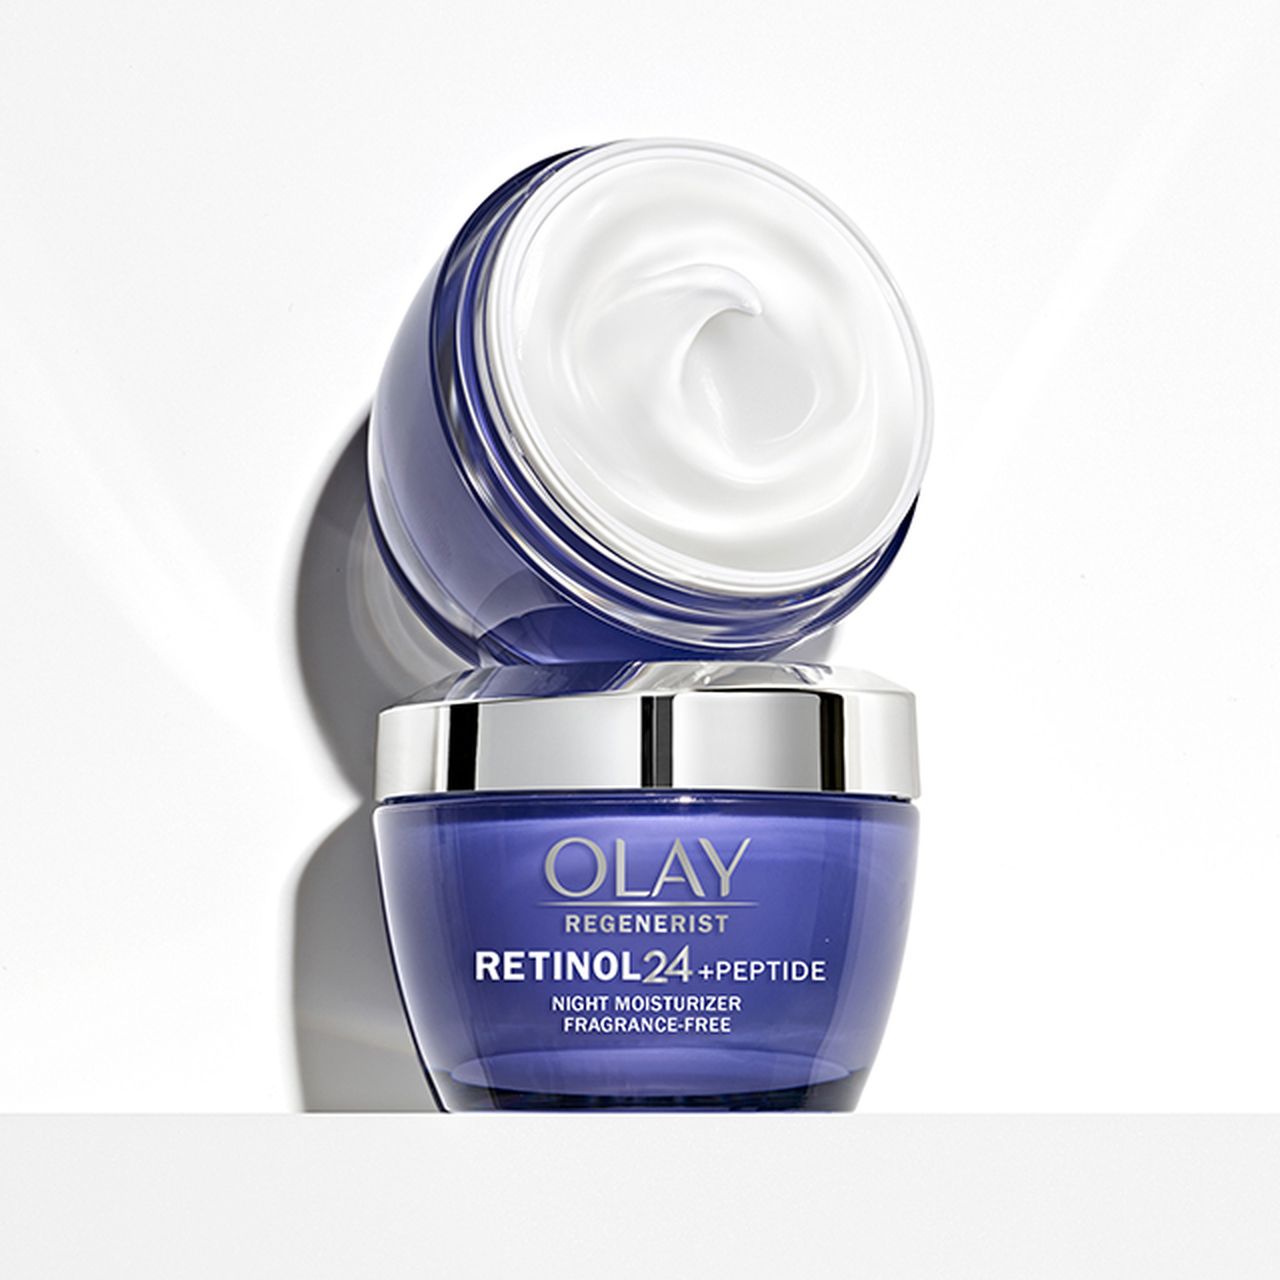 Retinol 24 + Peptide Night Face Moisturizer Fragrance Free